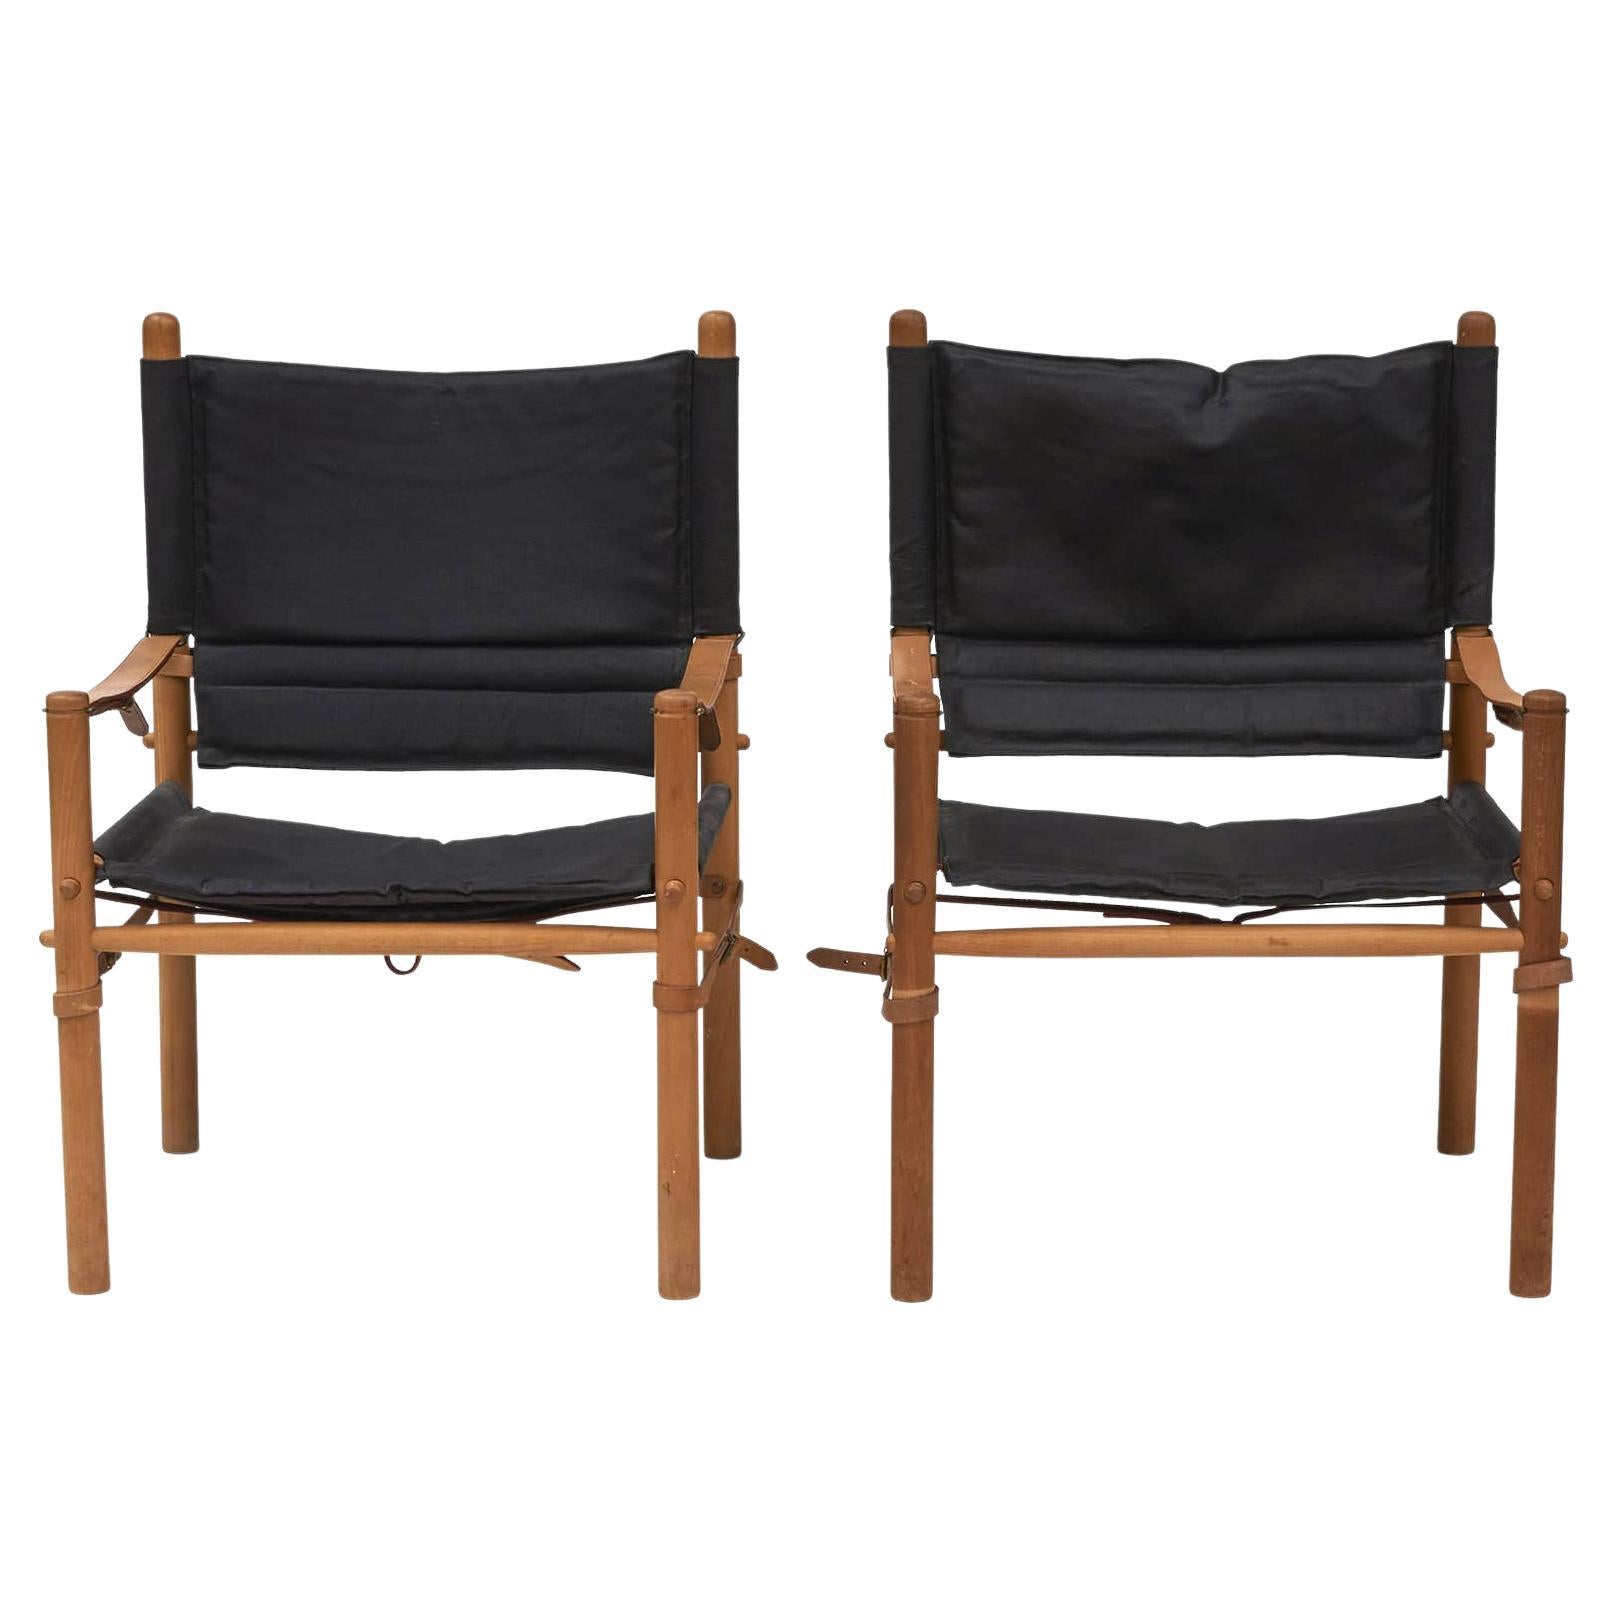 Pair of Axel Thygesen Oasis Safari Chairs for Interna, Denmark, 1960s For Sale